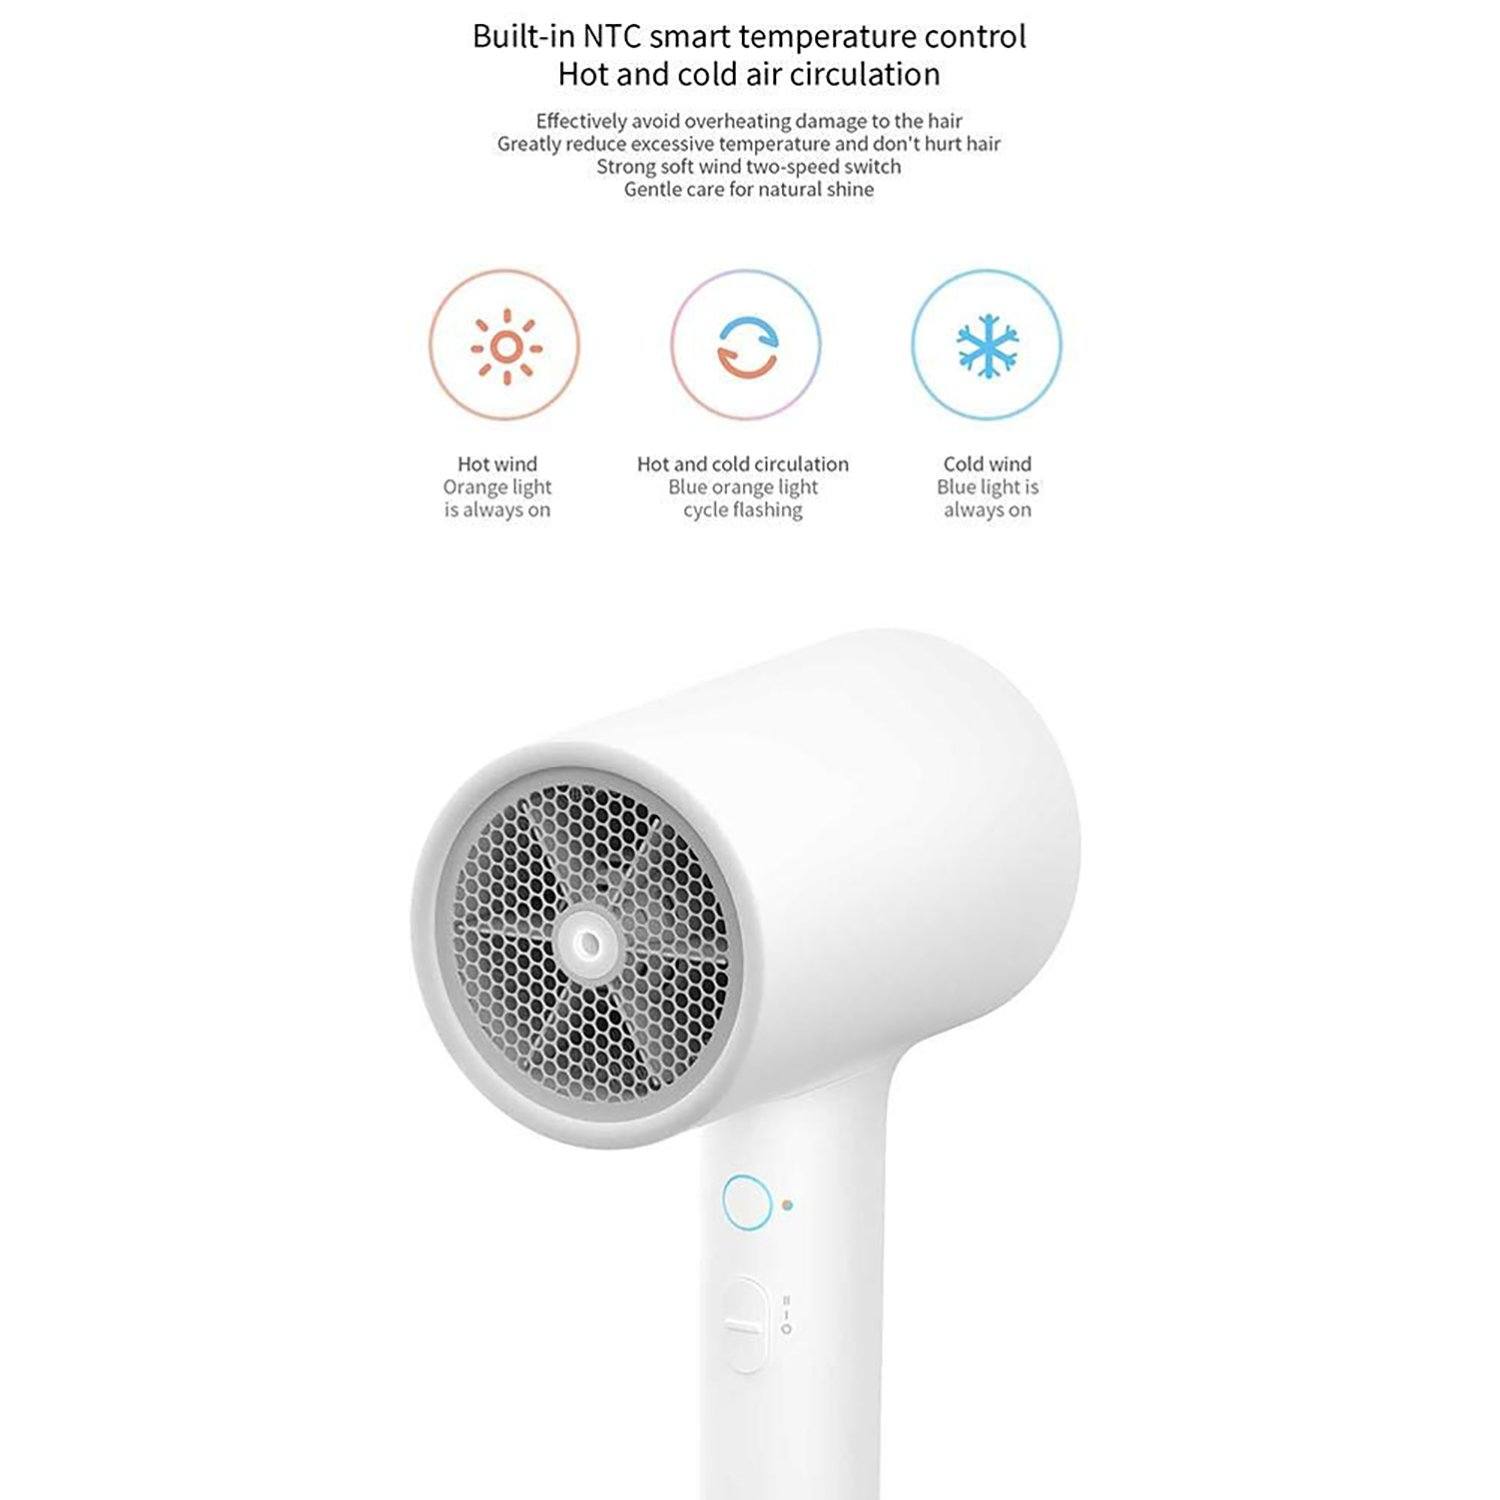 Xiaomi Mijia 1800W Water Ion Quick Drying Anti Damage Hair Dryer, White Default Xiaomi 